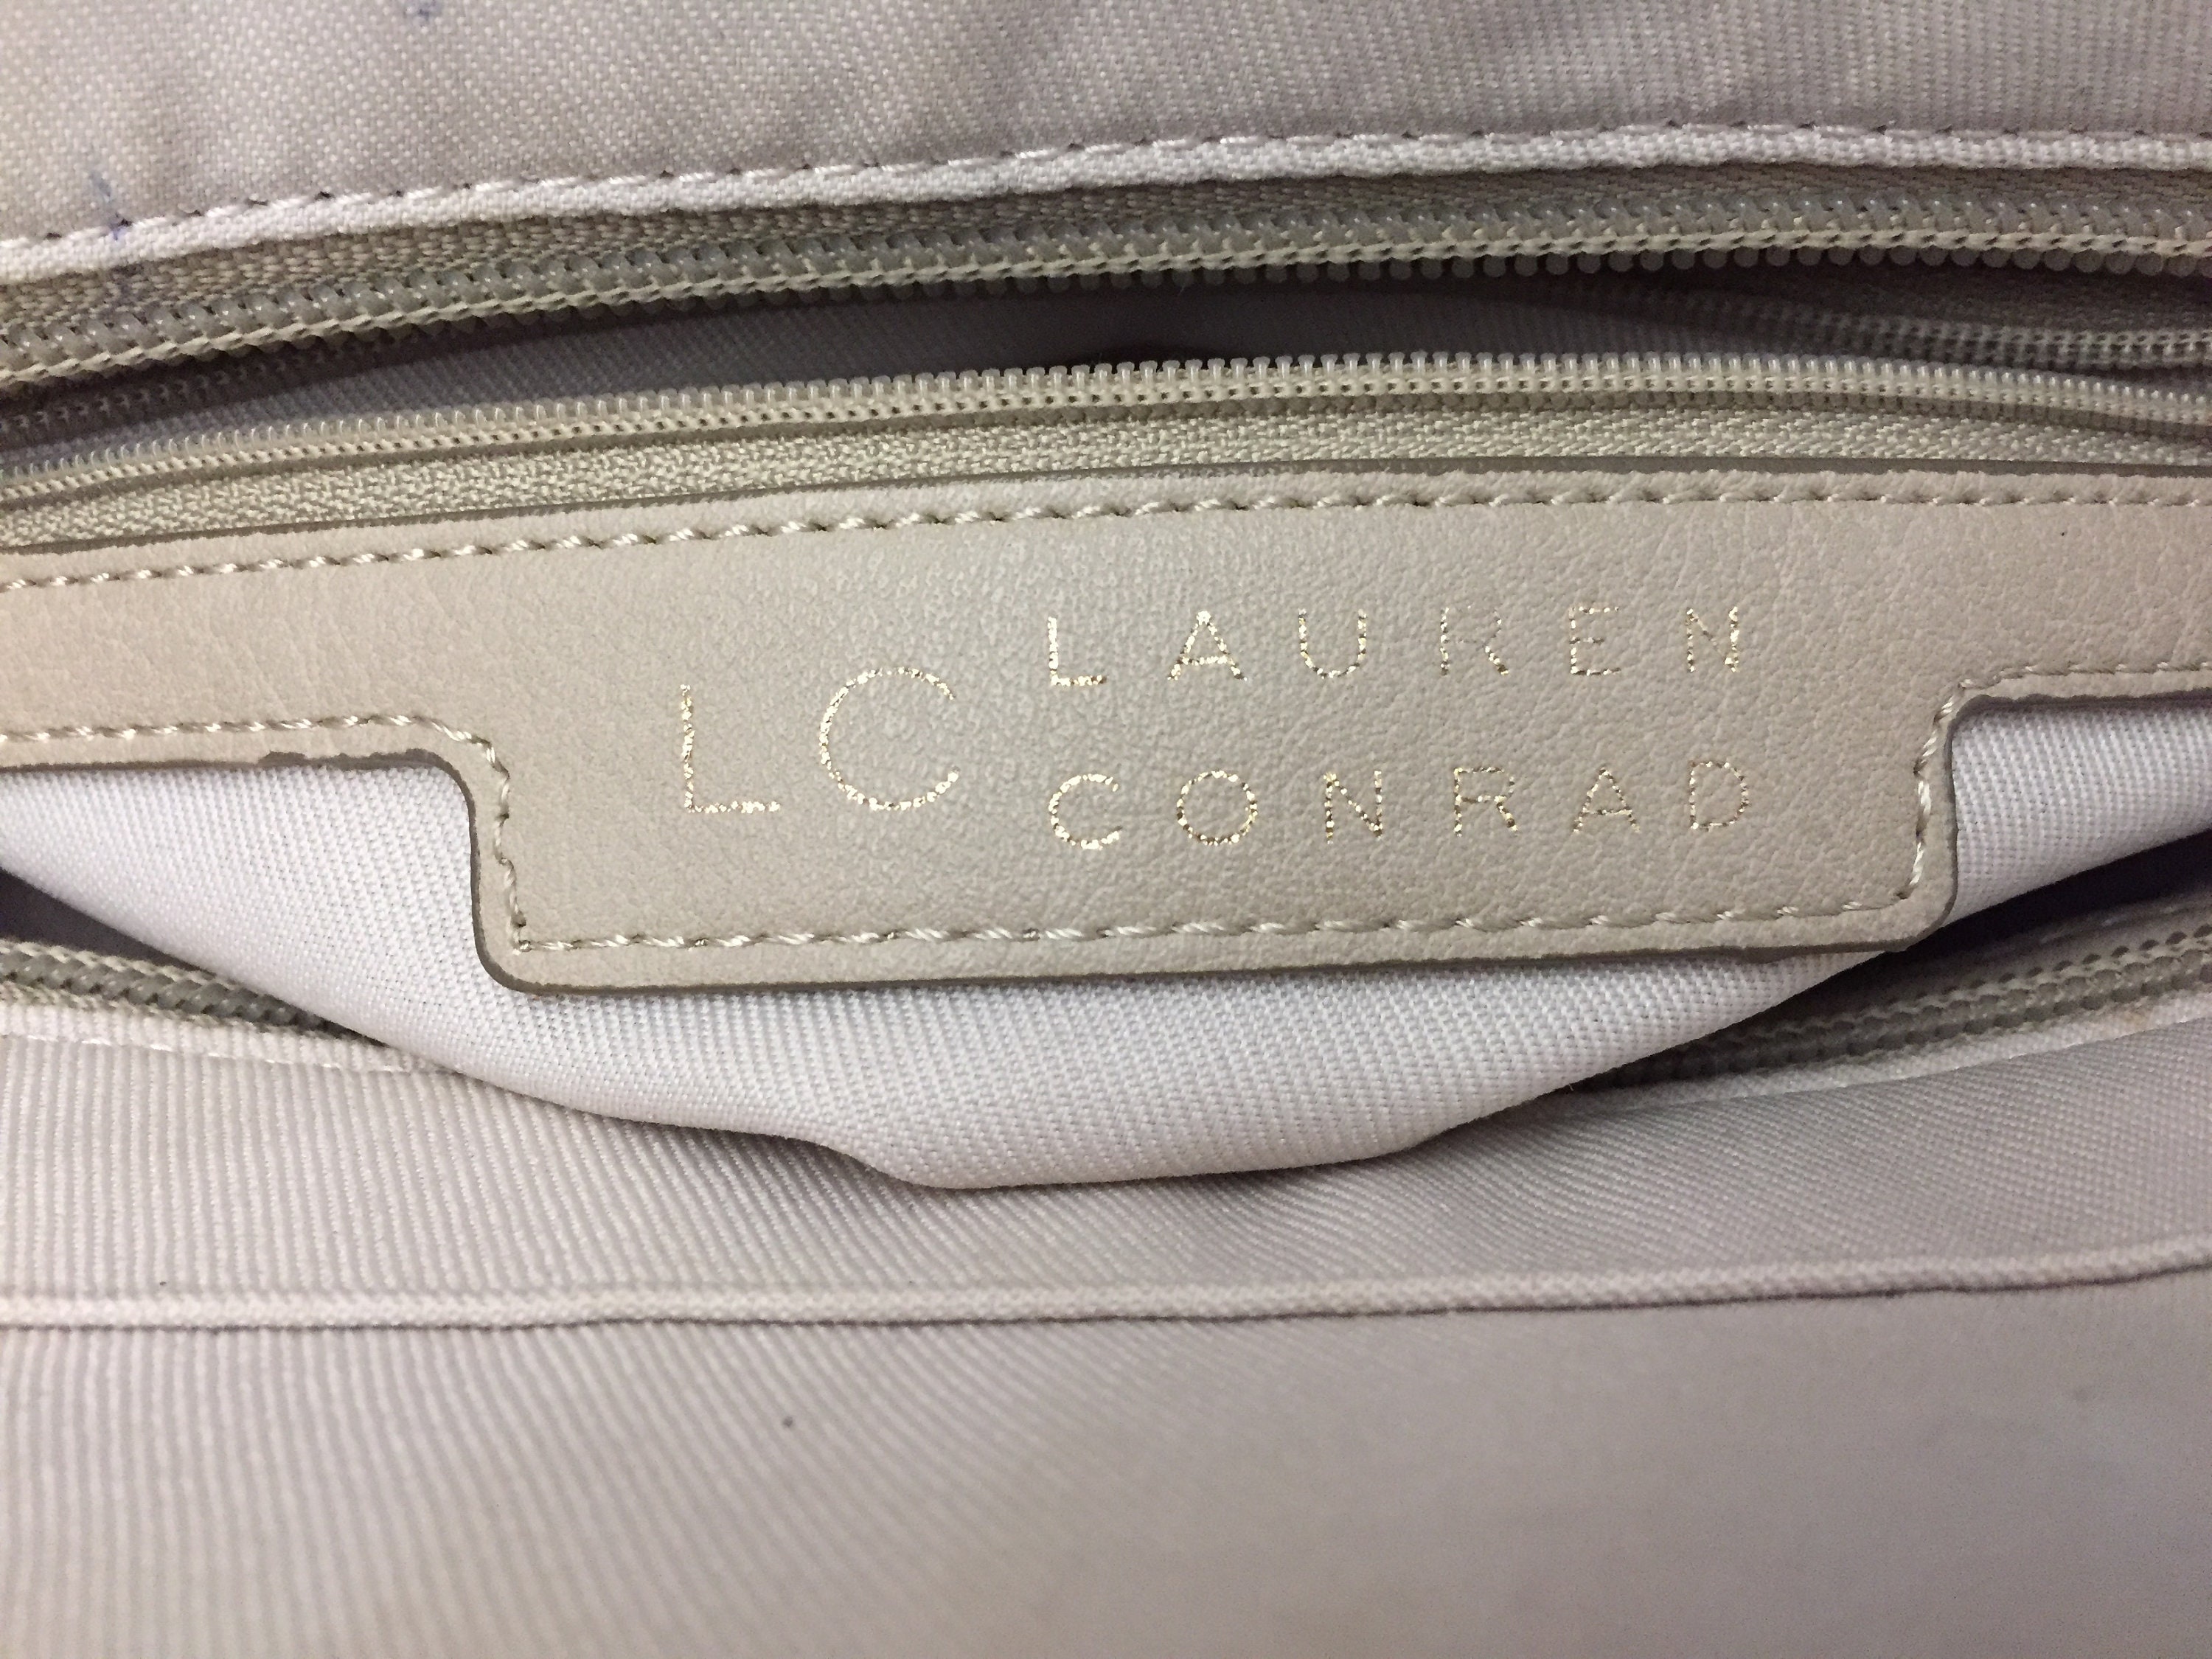 LC Lauren Conrad Market Tote Bag